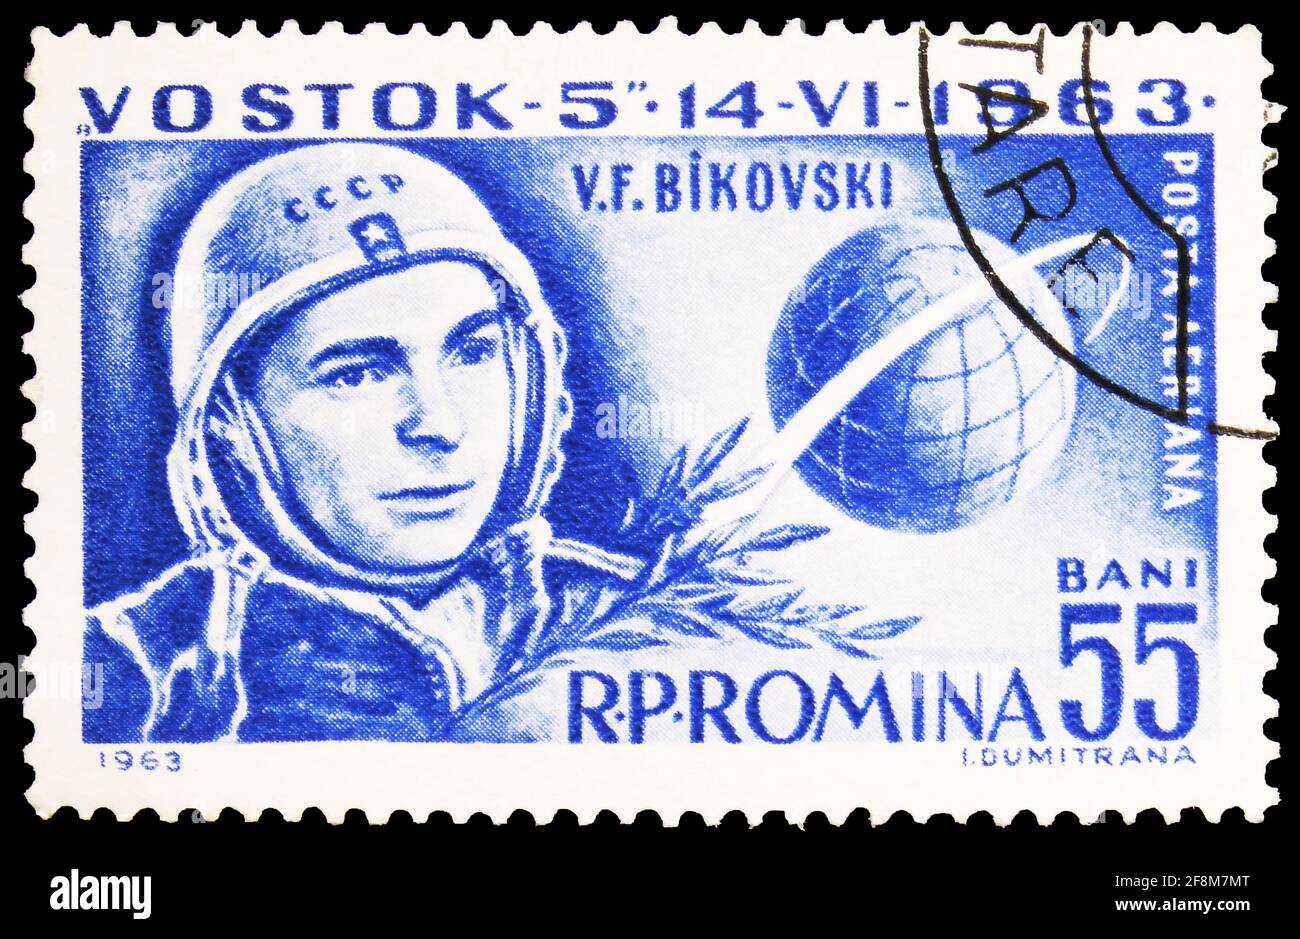 MOSCOW, RUSSIA - SEPTEMBER 30, 2019: Postage stamp printed in Romania shows Valeri Bykowski & Globe with orbit, Vostok 5 and 6 serie, circa 1963 Stock Photo